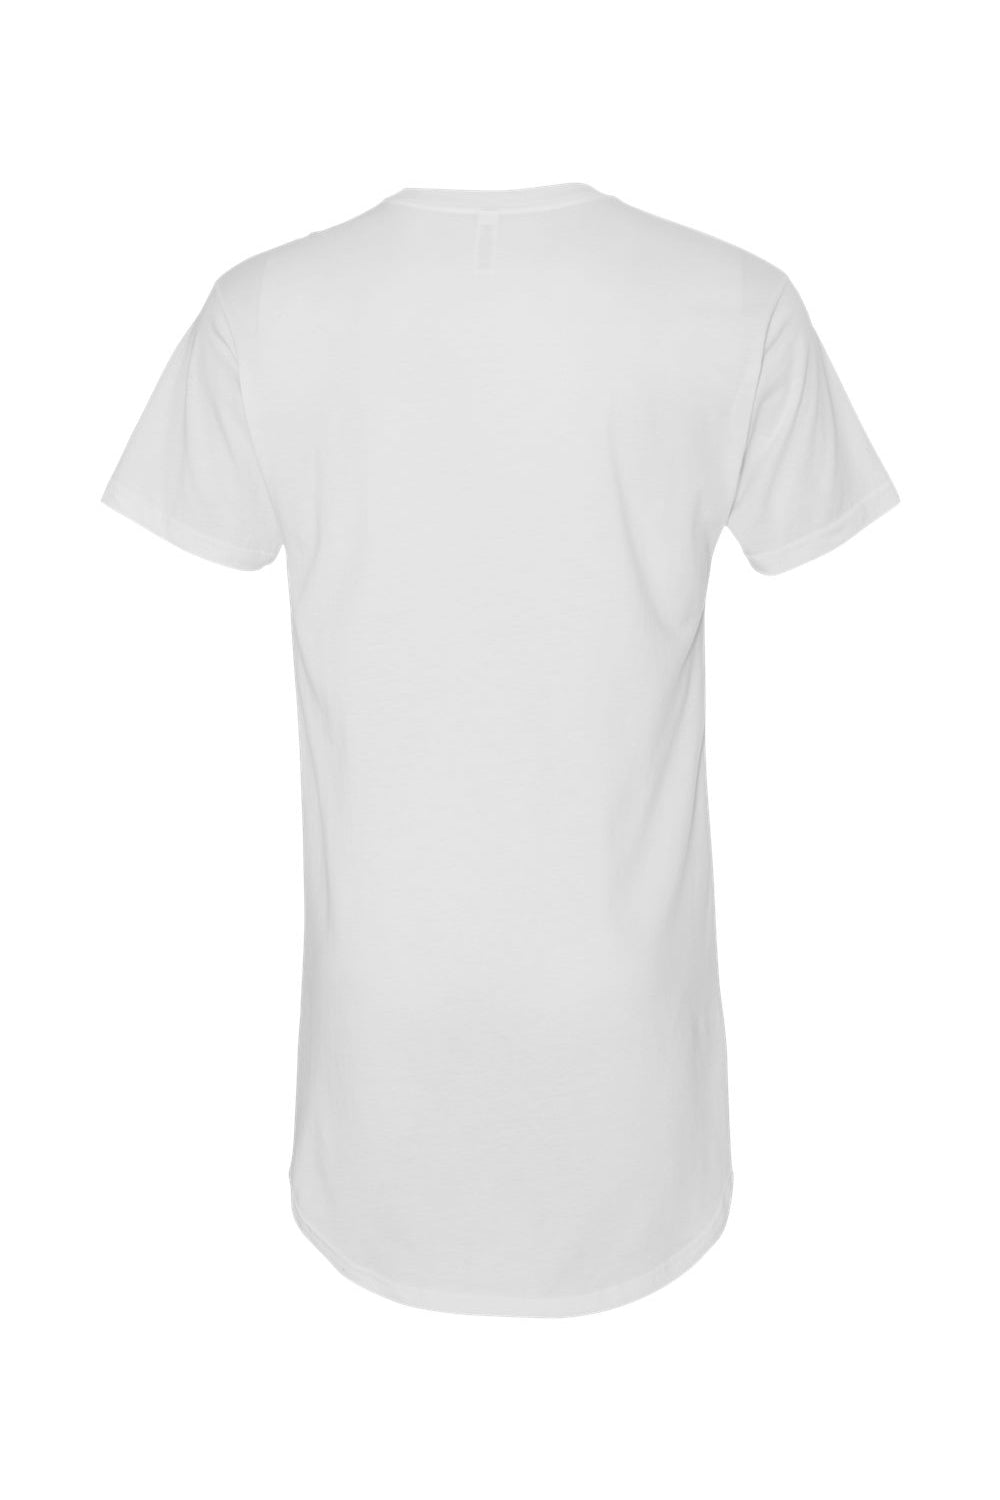 Bella + Canvas 3006 Mens Long Body Urban Short Sleeve Crewneck T-Shirt White Flat Back